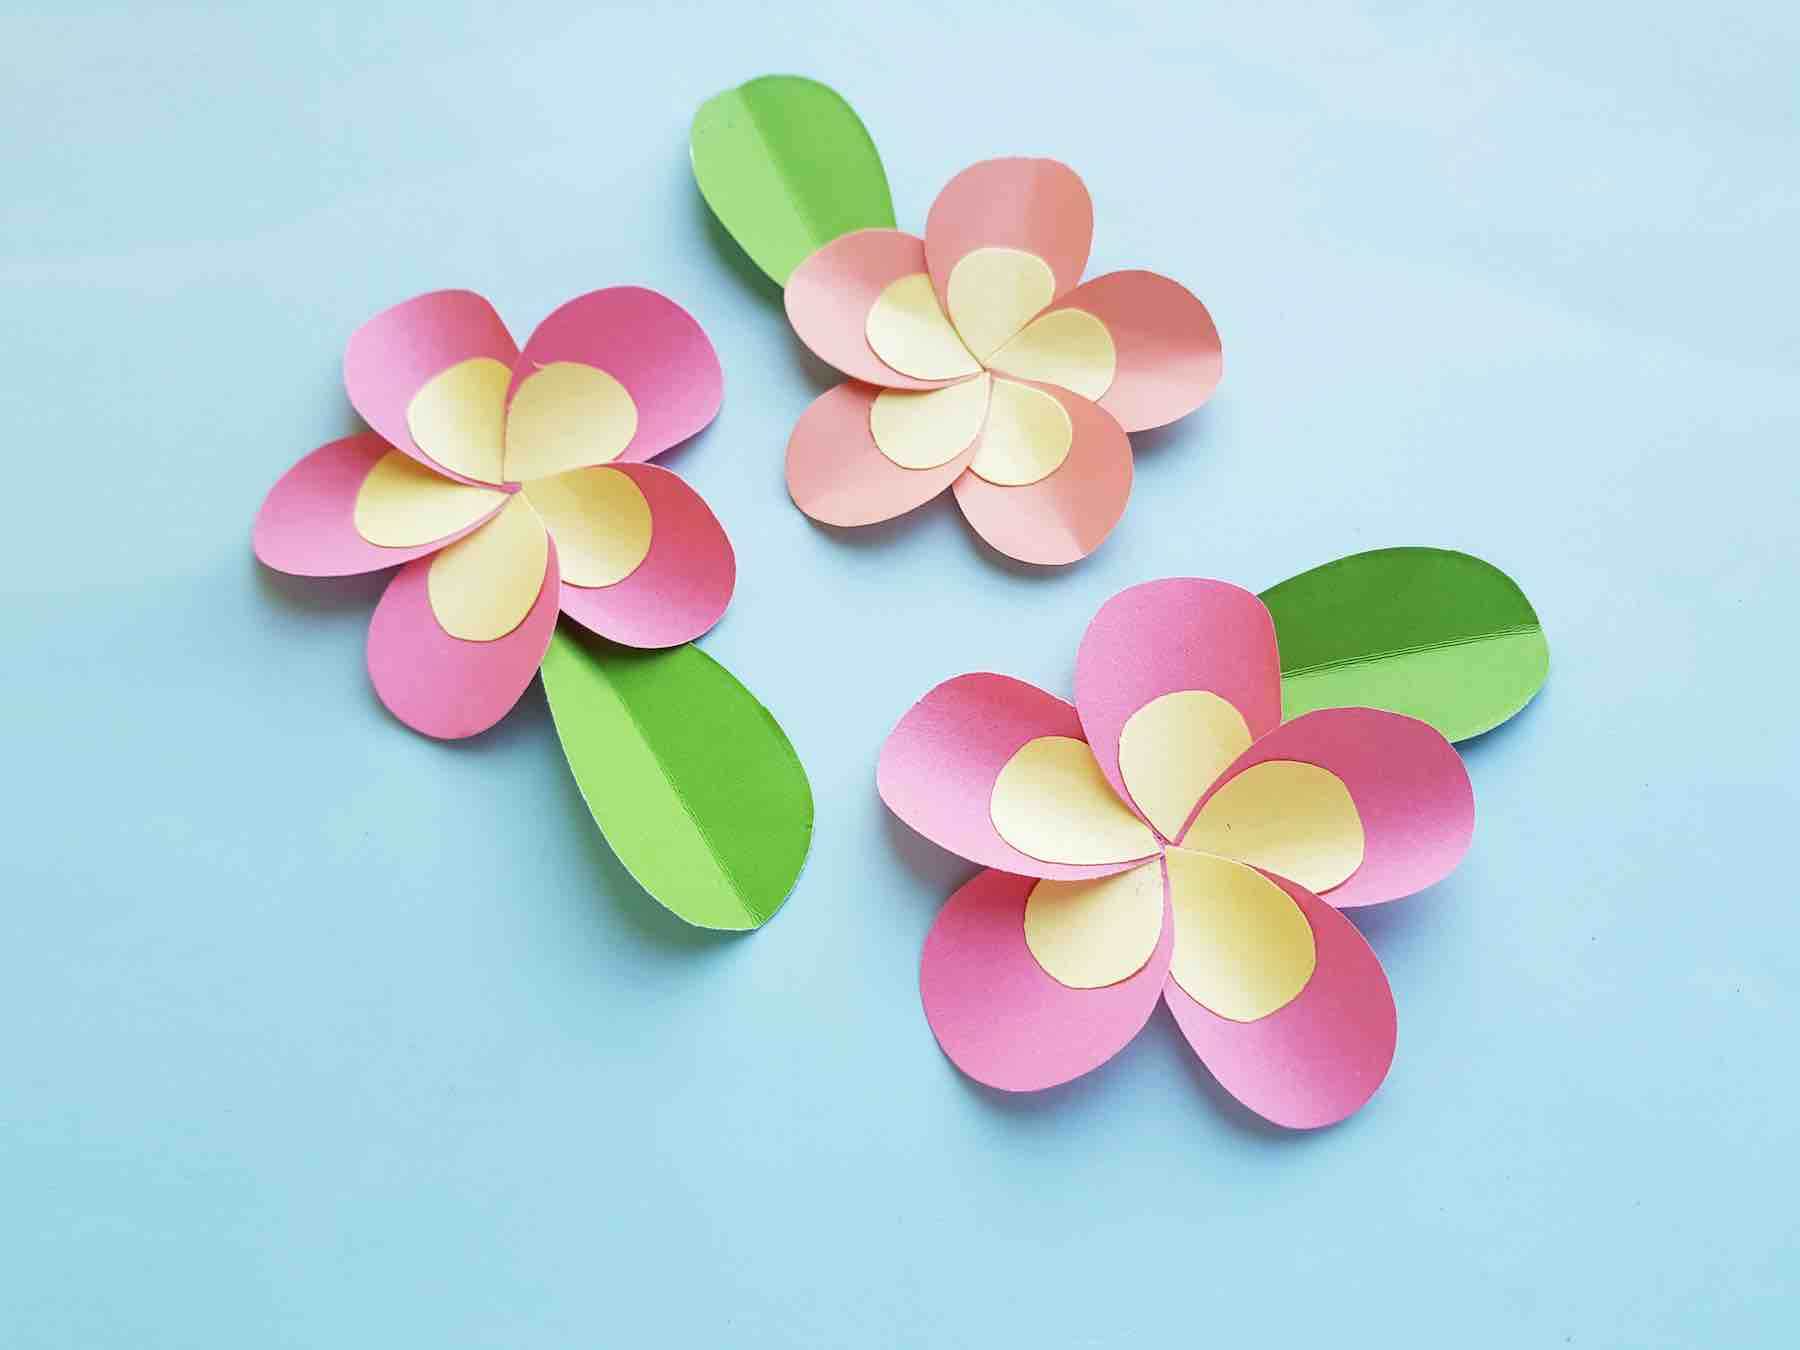 DIY Amazing Flower Art For decorationConstruction Paper Flower Crafts